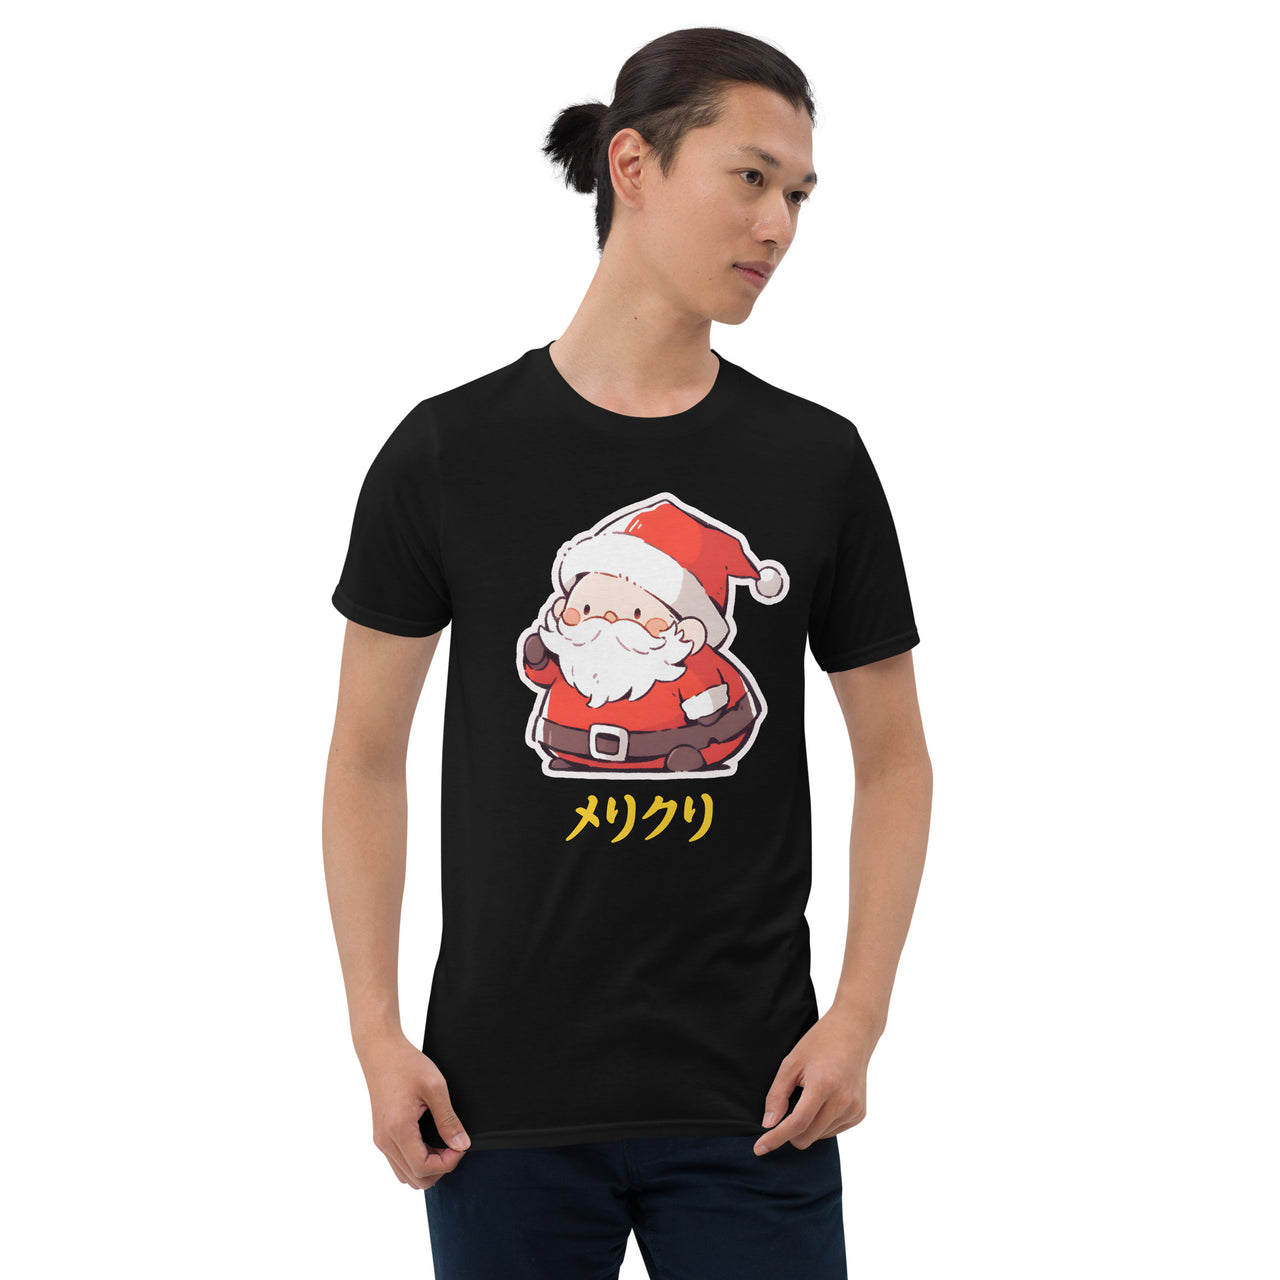 Chibi Merikuri Santa in Japanese T-Shirt